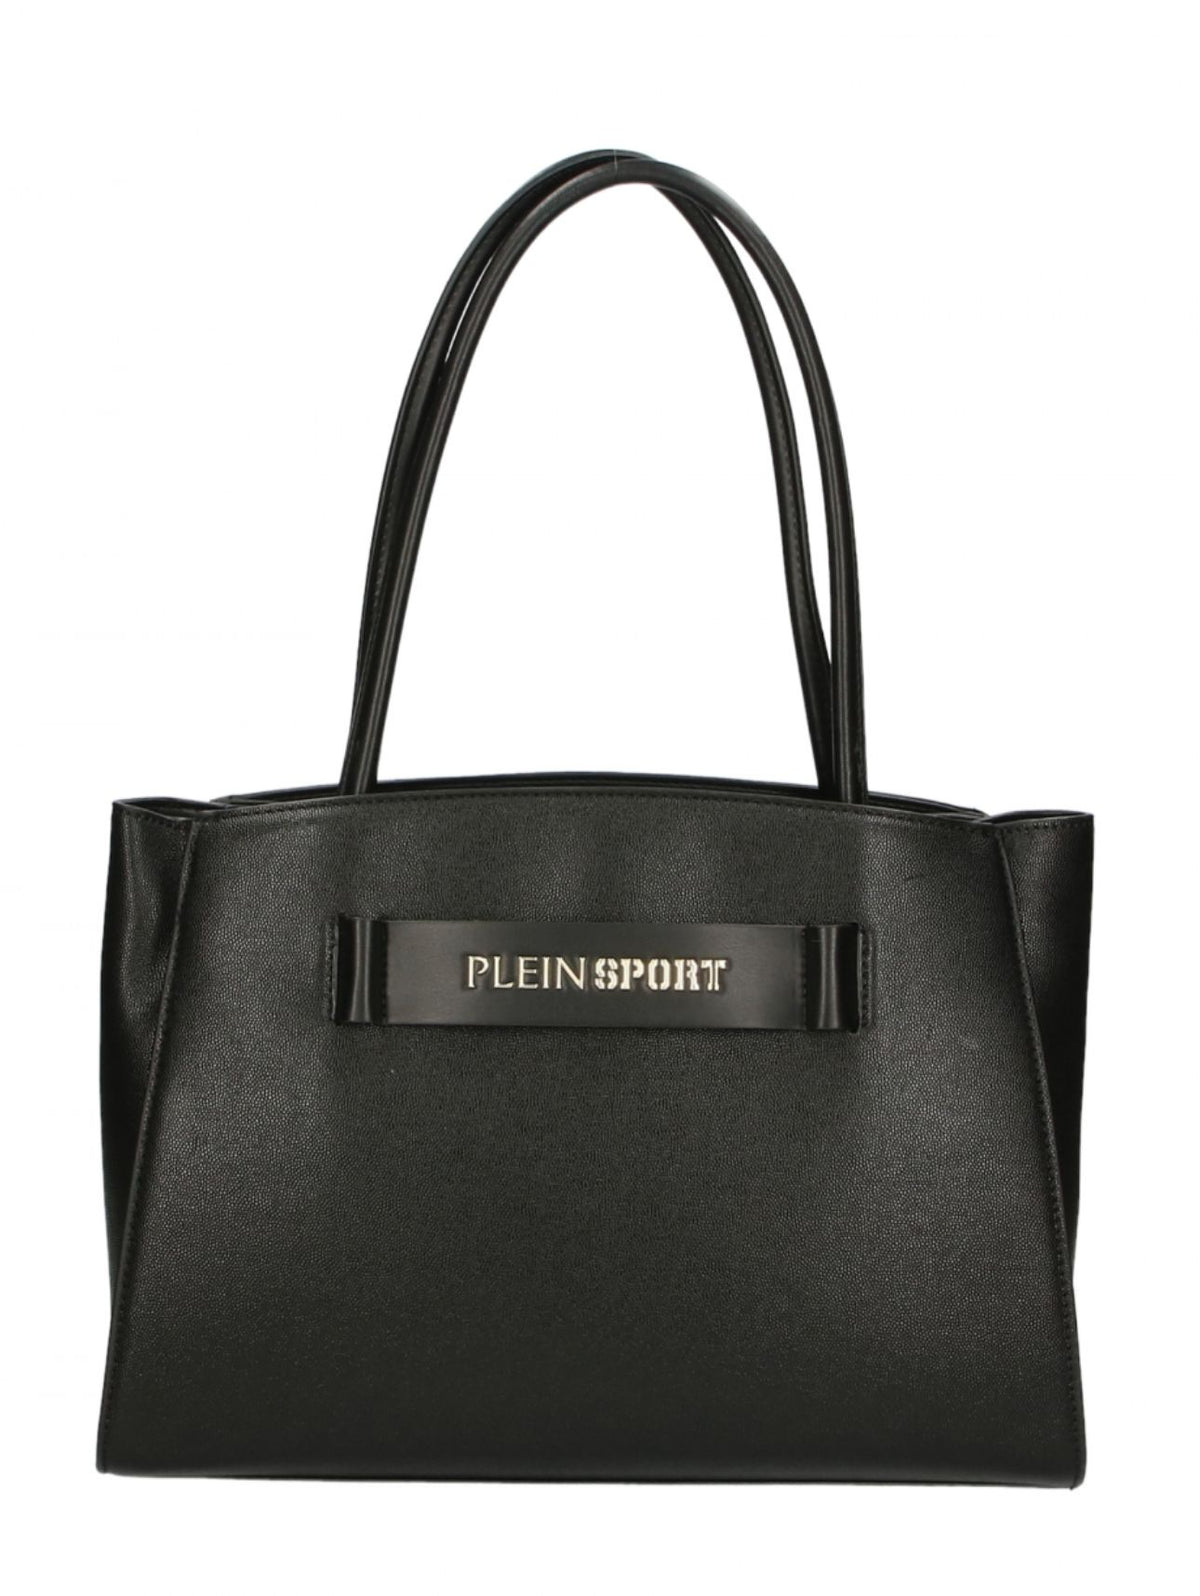 Plein Sport Sleek Black Three-Compartment Tote Bag